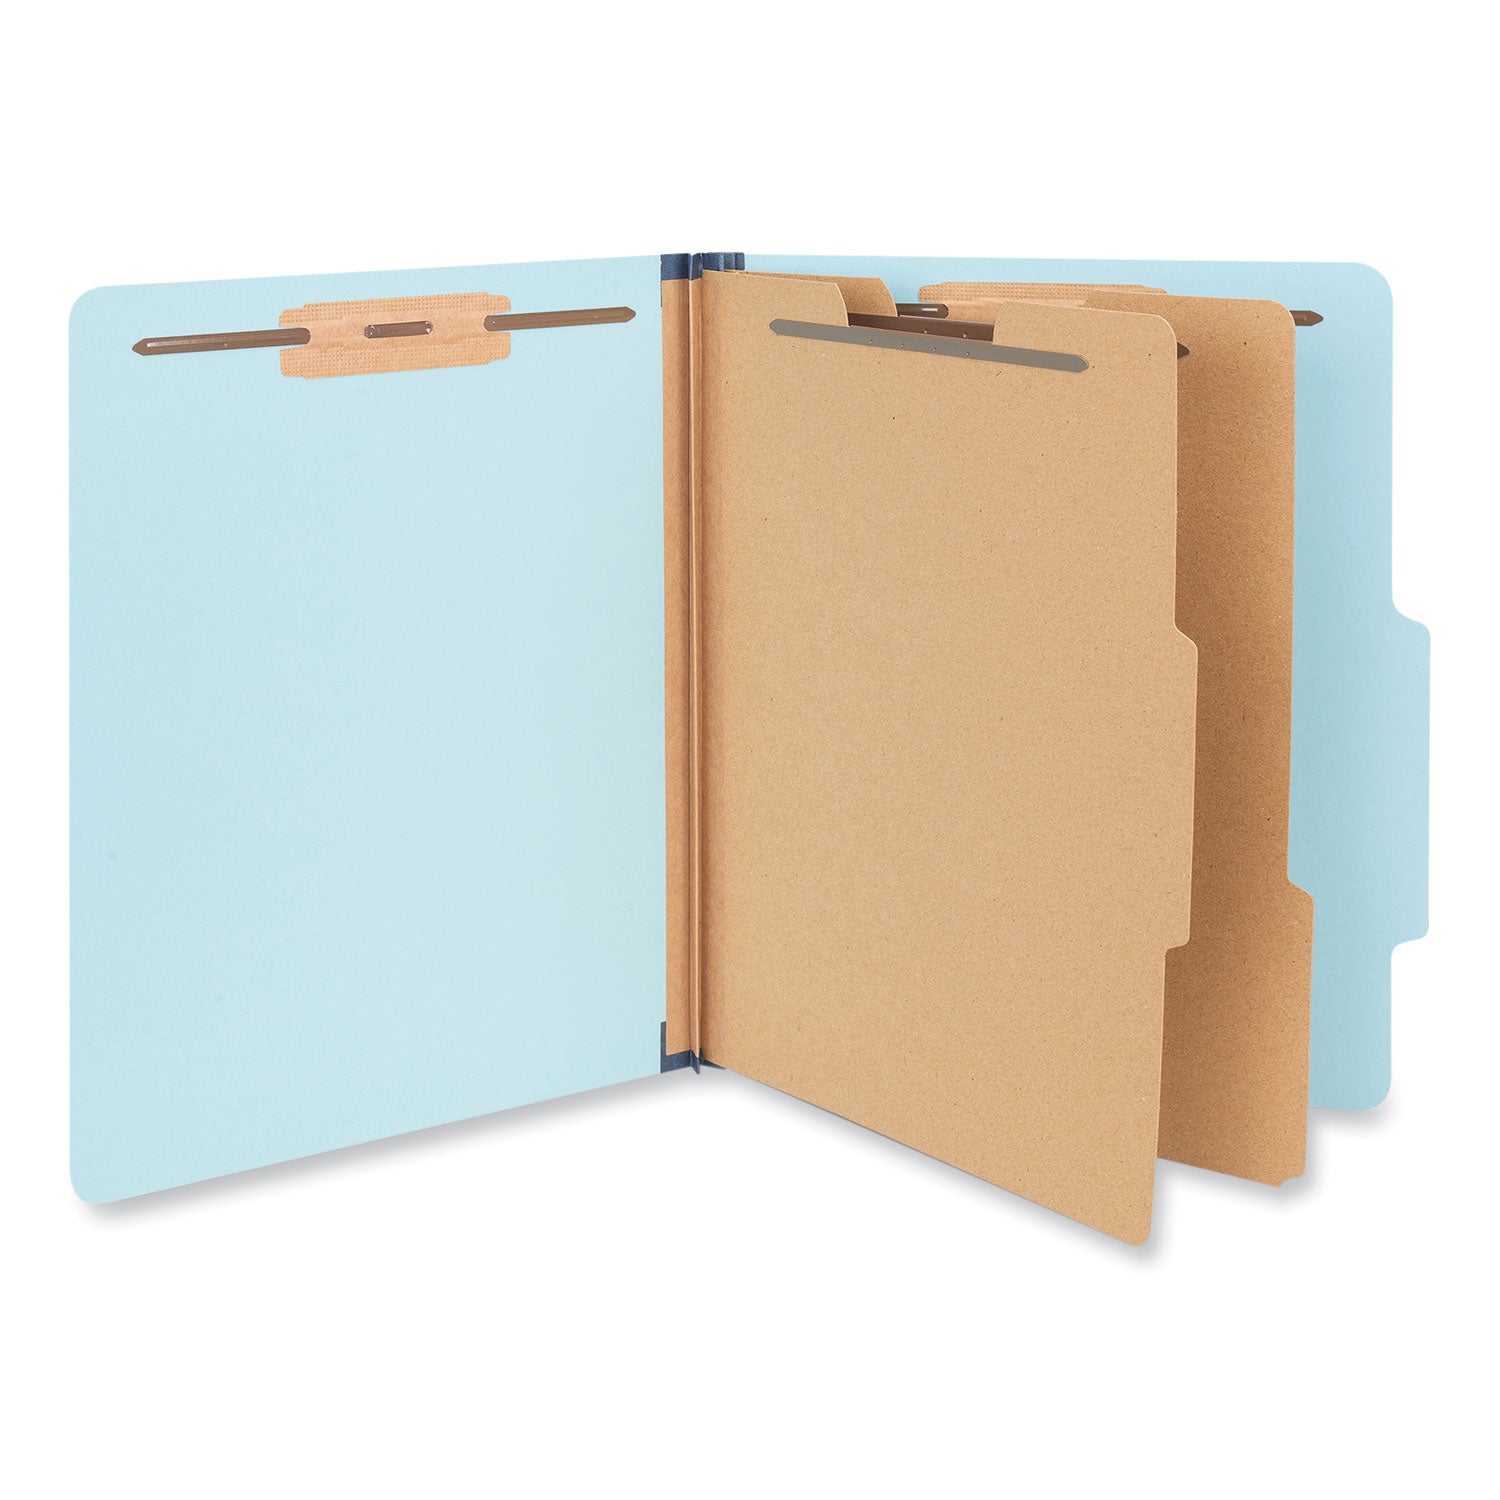 six-section-classification-folders-heavy-duty-pressboard-cover-2-dividers-6-fasteners-letter-size-light-blue-20-box_unv10409 - 1